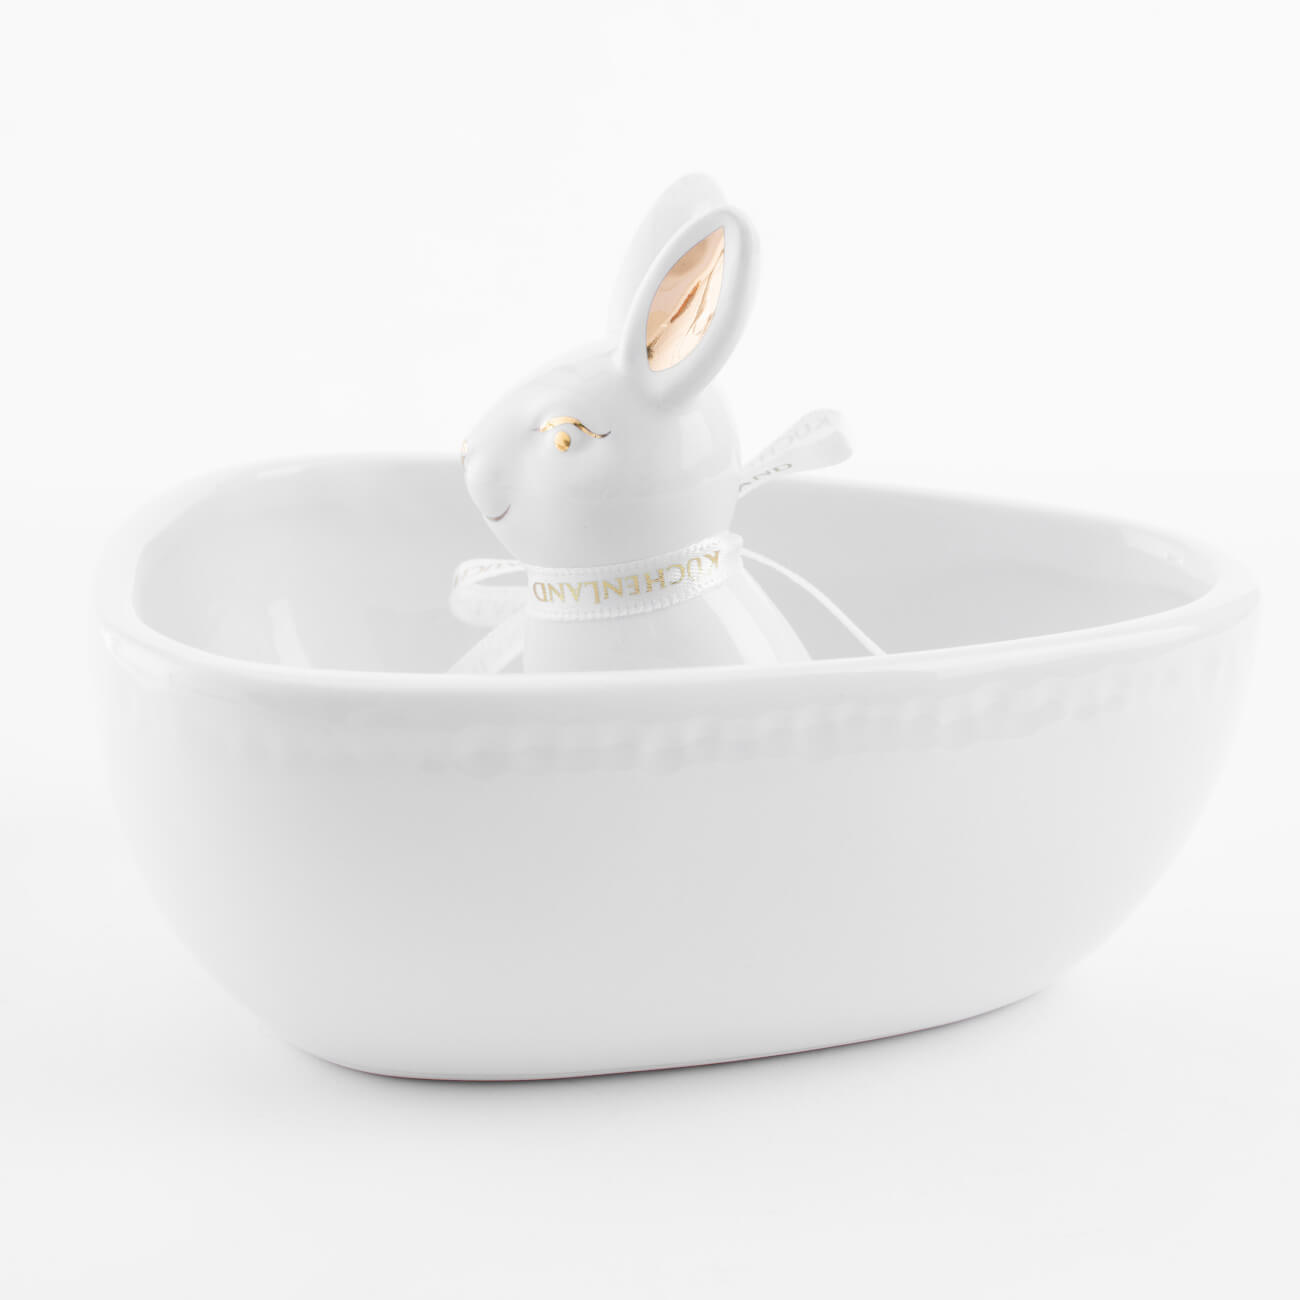 Конфетница, 13х13 см, керамика, бело-золотистая, Кролик внутри, Easter gold блюдо керамика 23х12х4 см астра lefard 264 1021